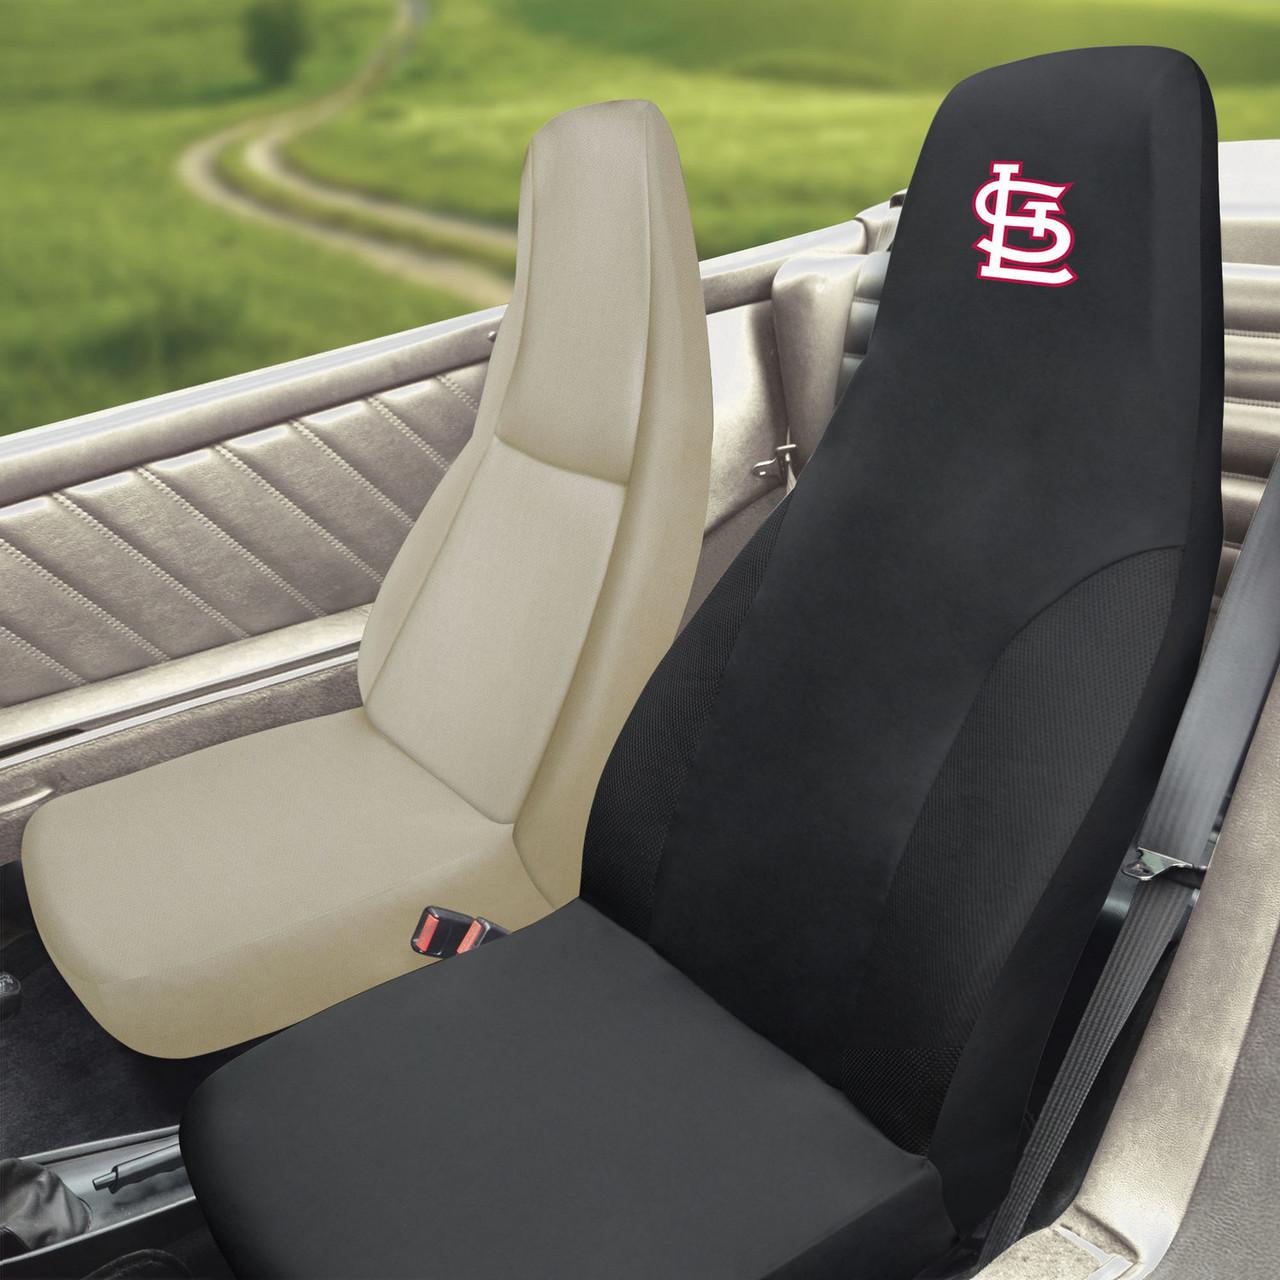 St. Louis Cardinals Black Car Seat Cover